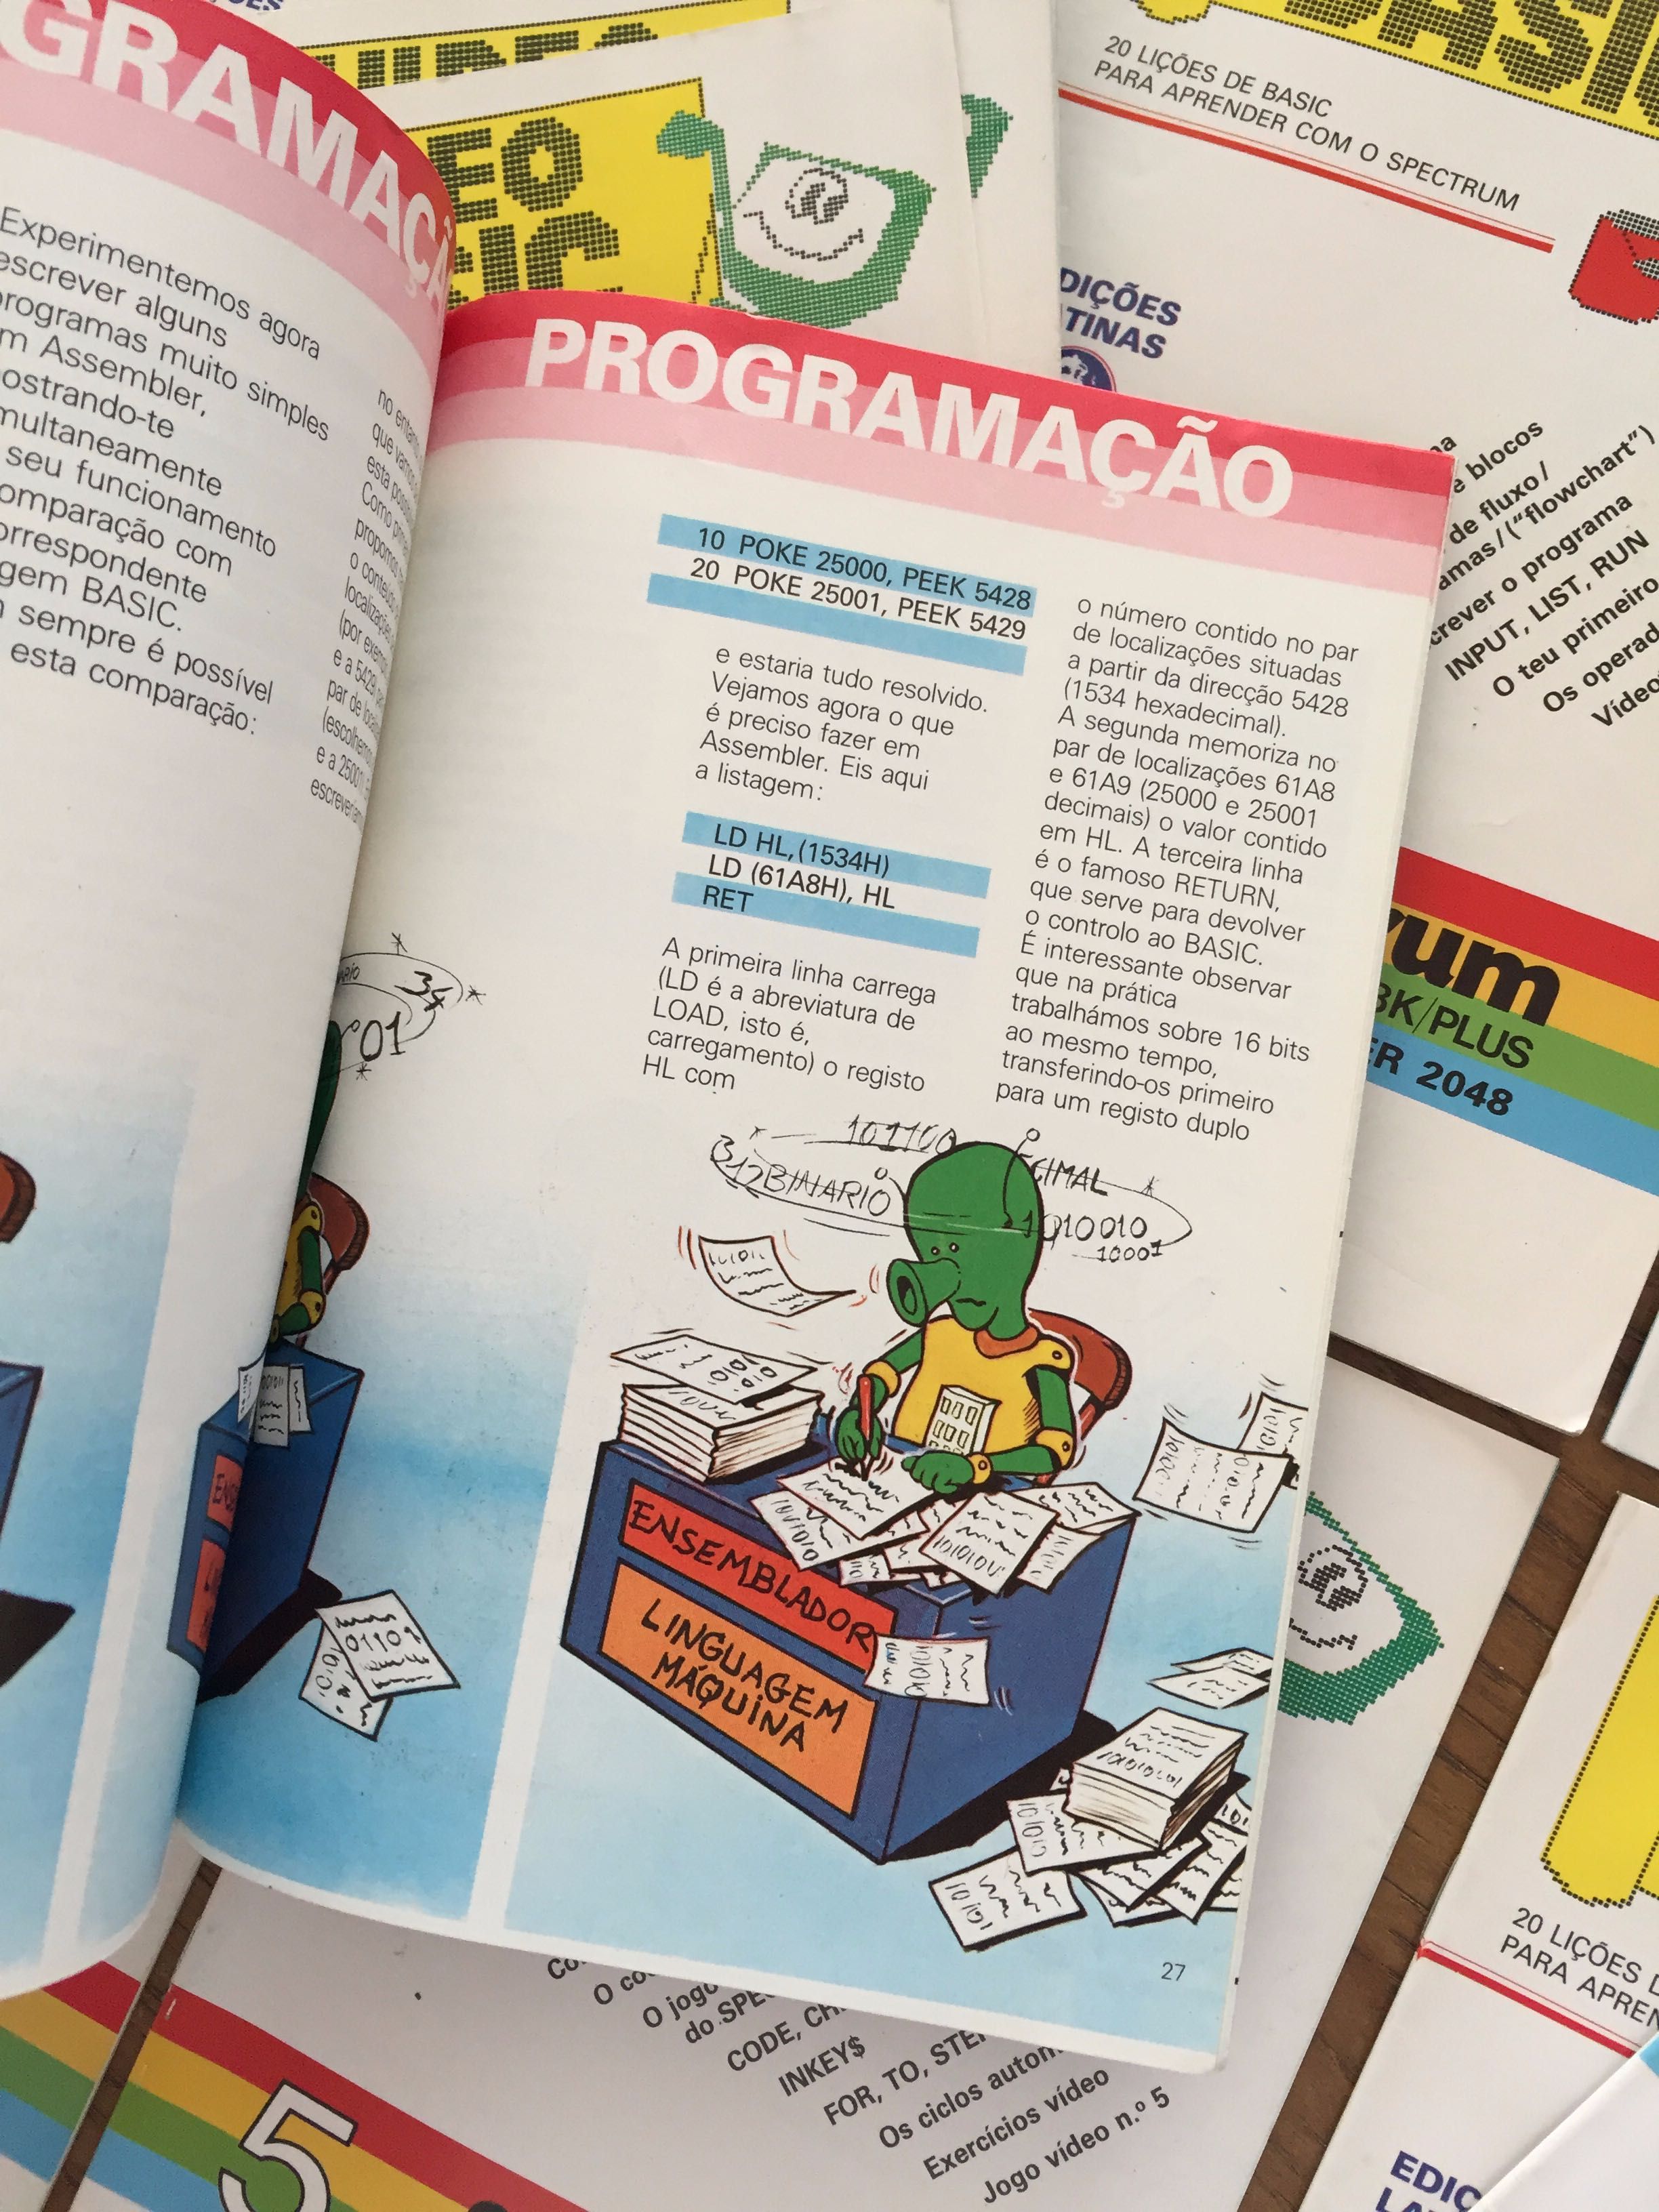 Video Basic Spectrum ZX revistas livros fascículos retro